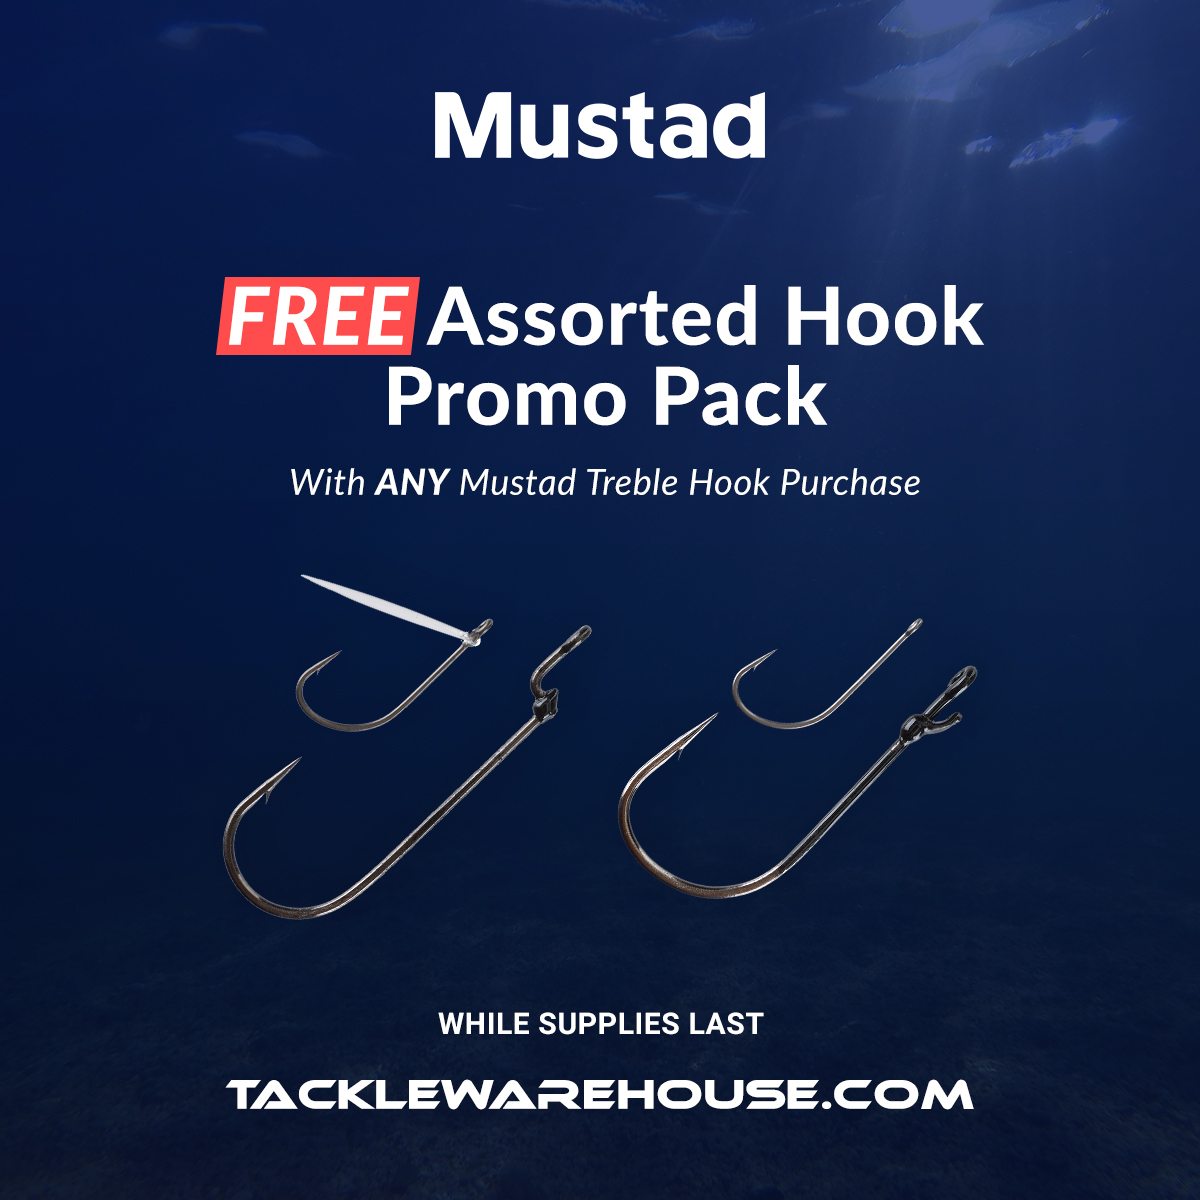 FREE Mustad Promo Pack W/ Treble Hook Purchase